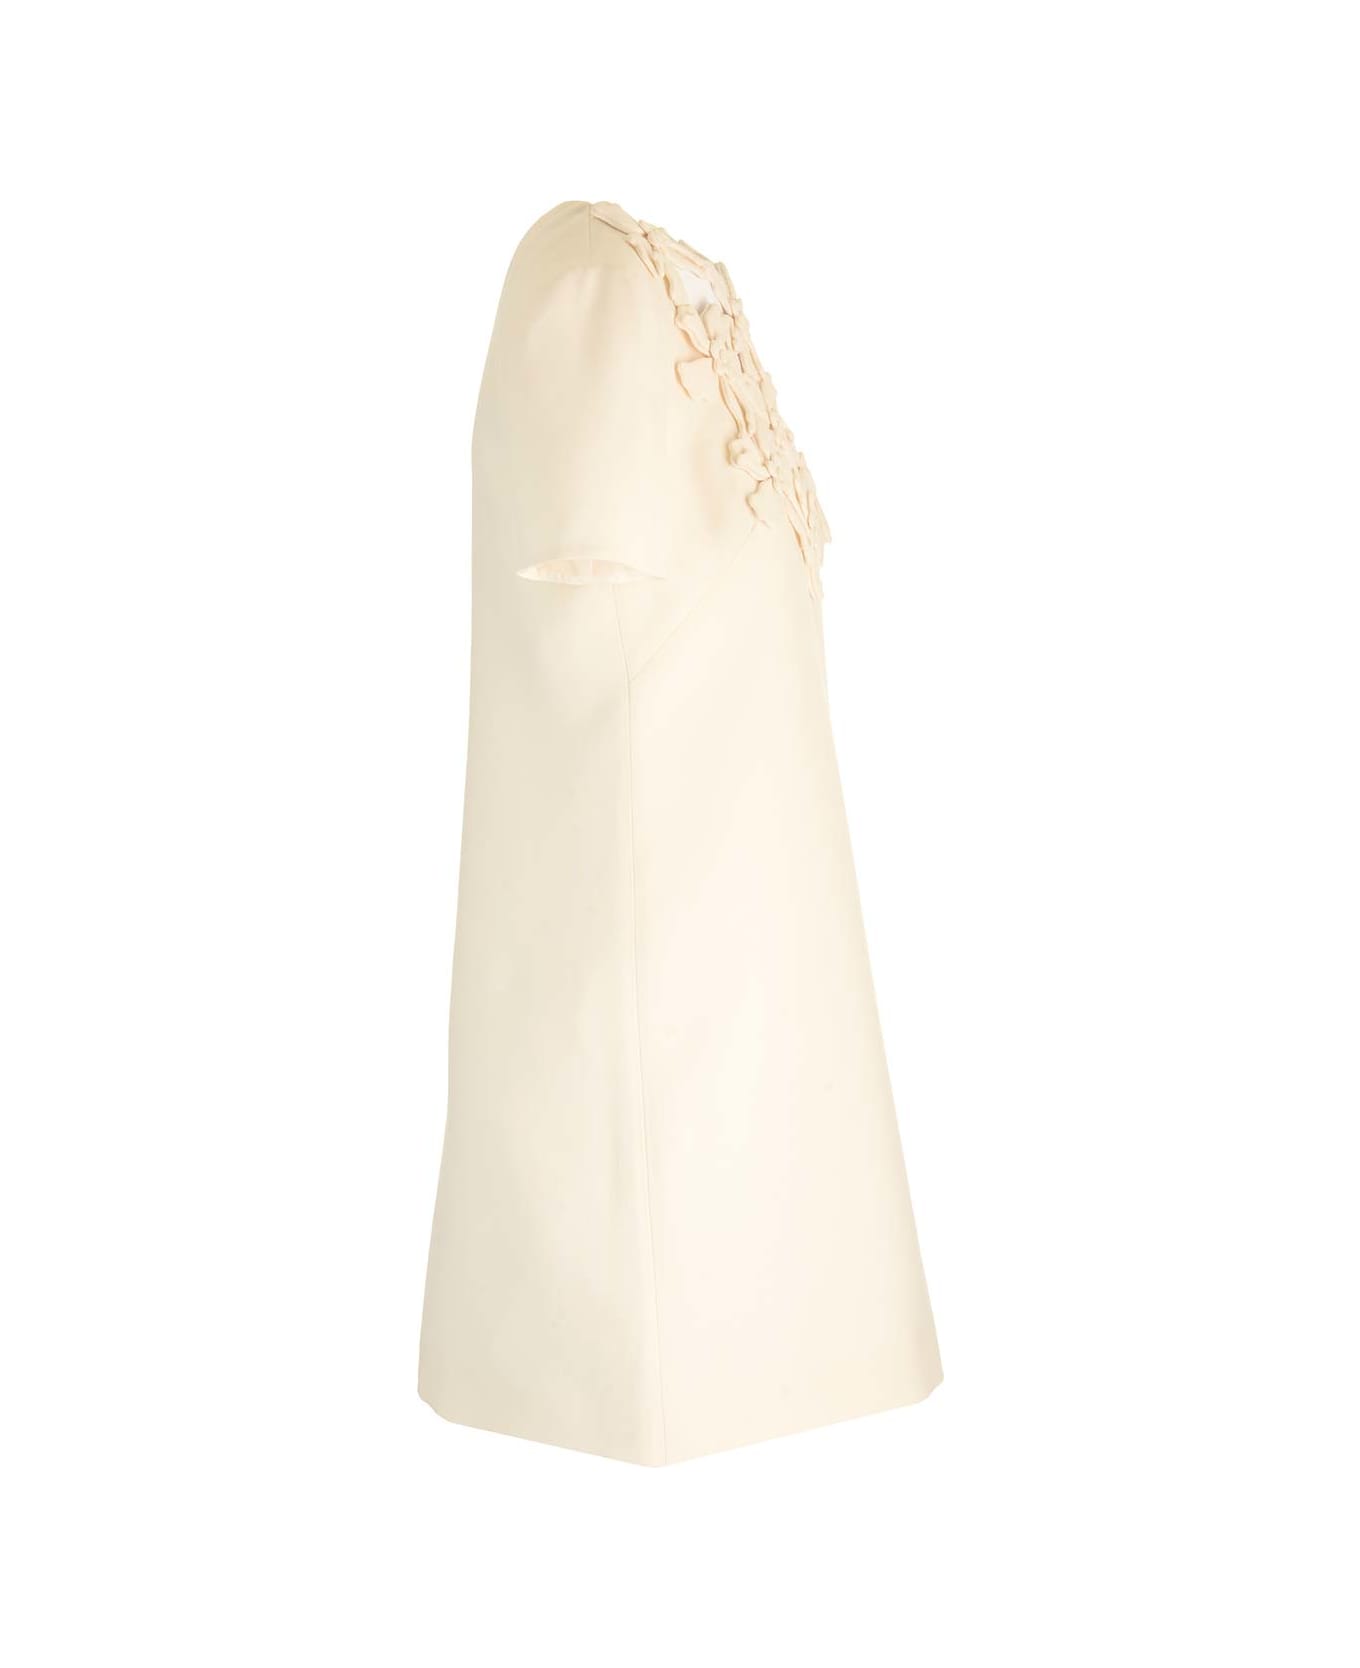 Valentino 'hibiscus' Embroidery Mini Dress - White ワンピース＆ドレス